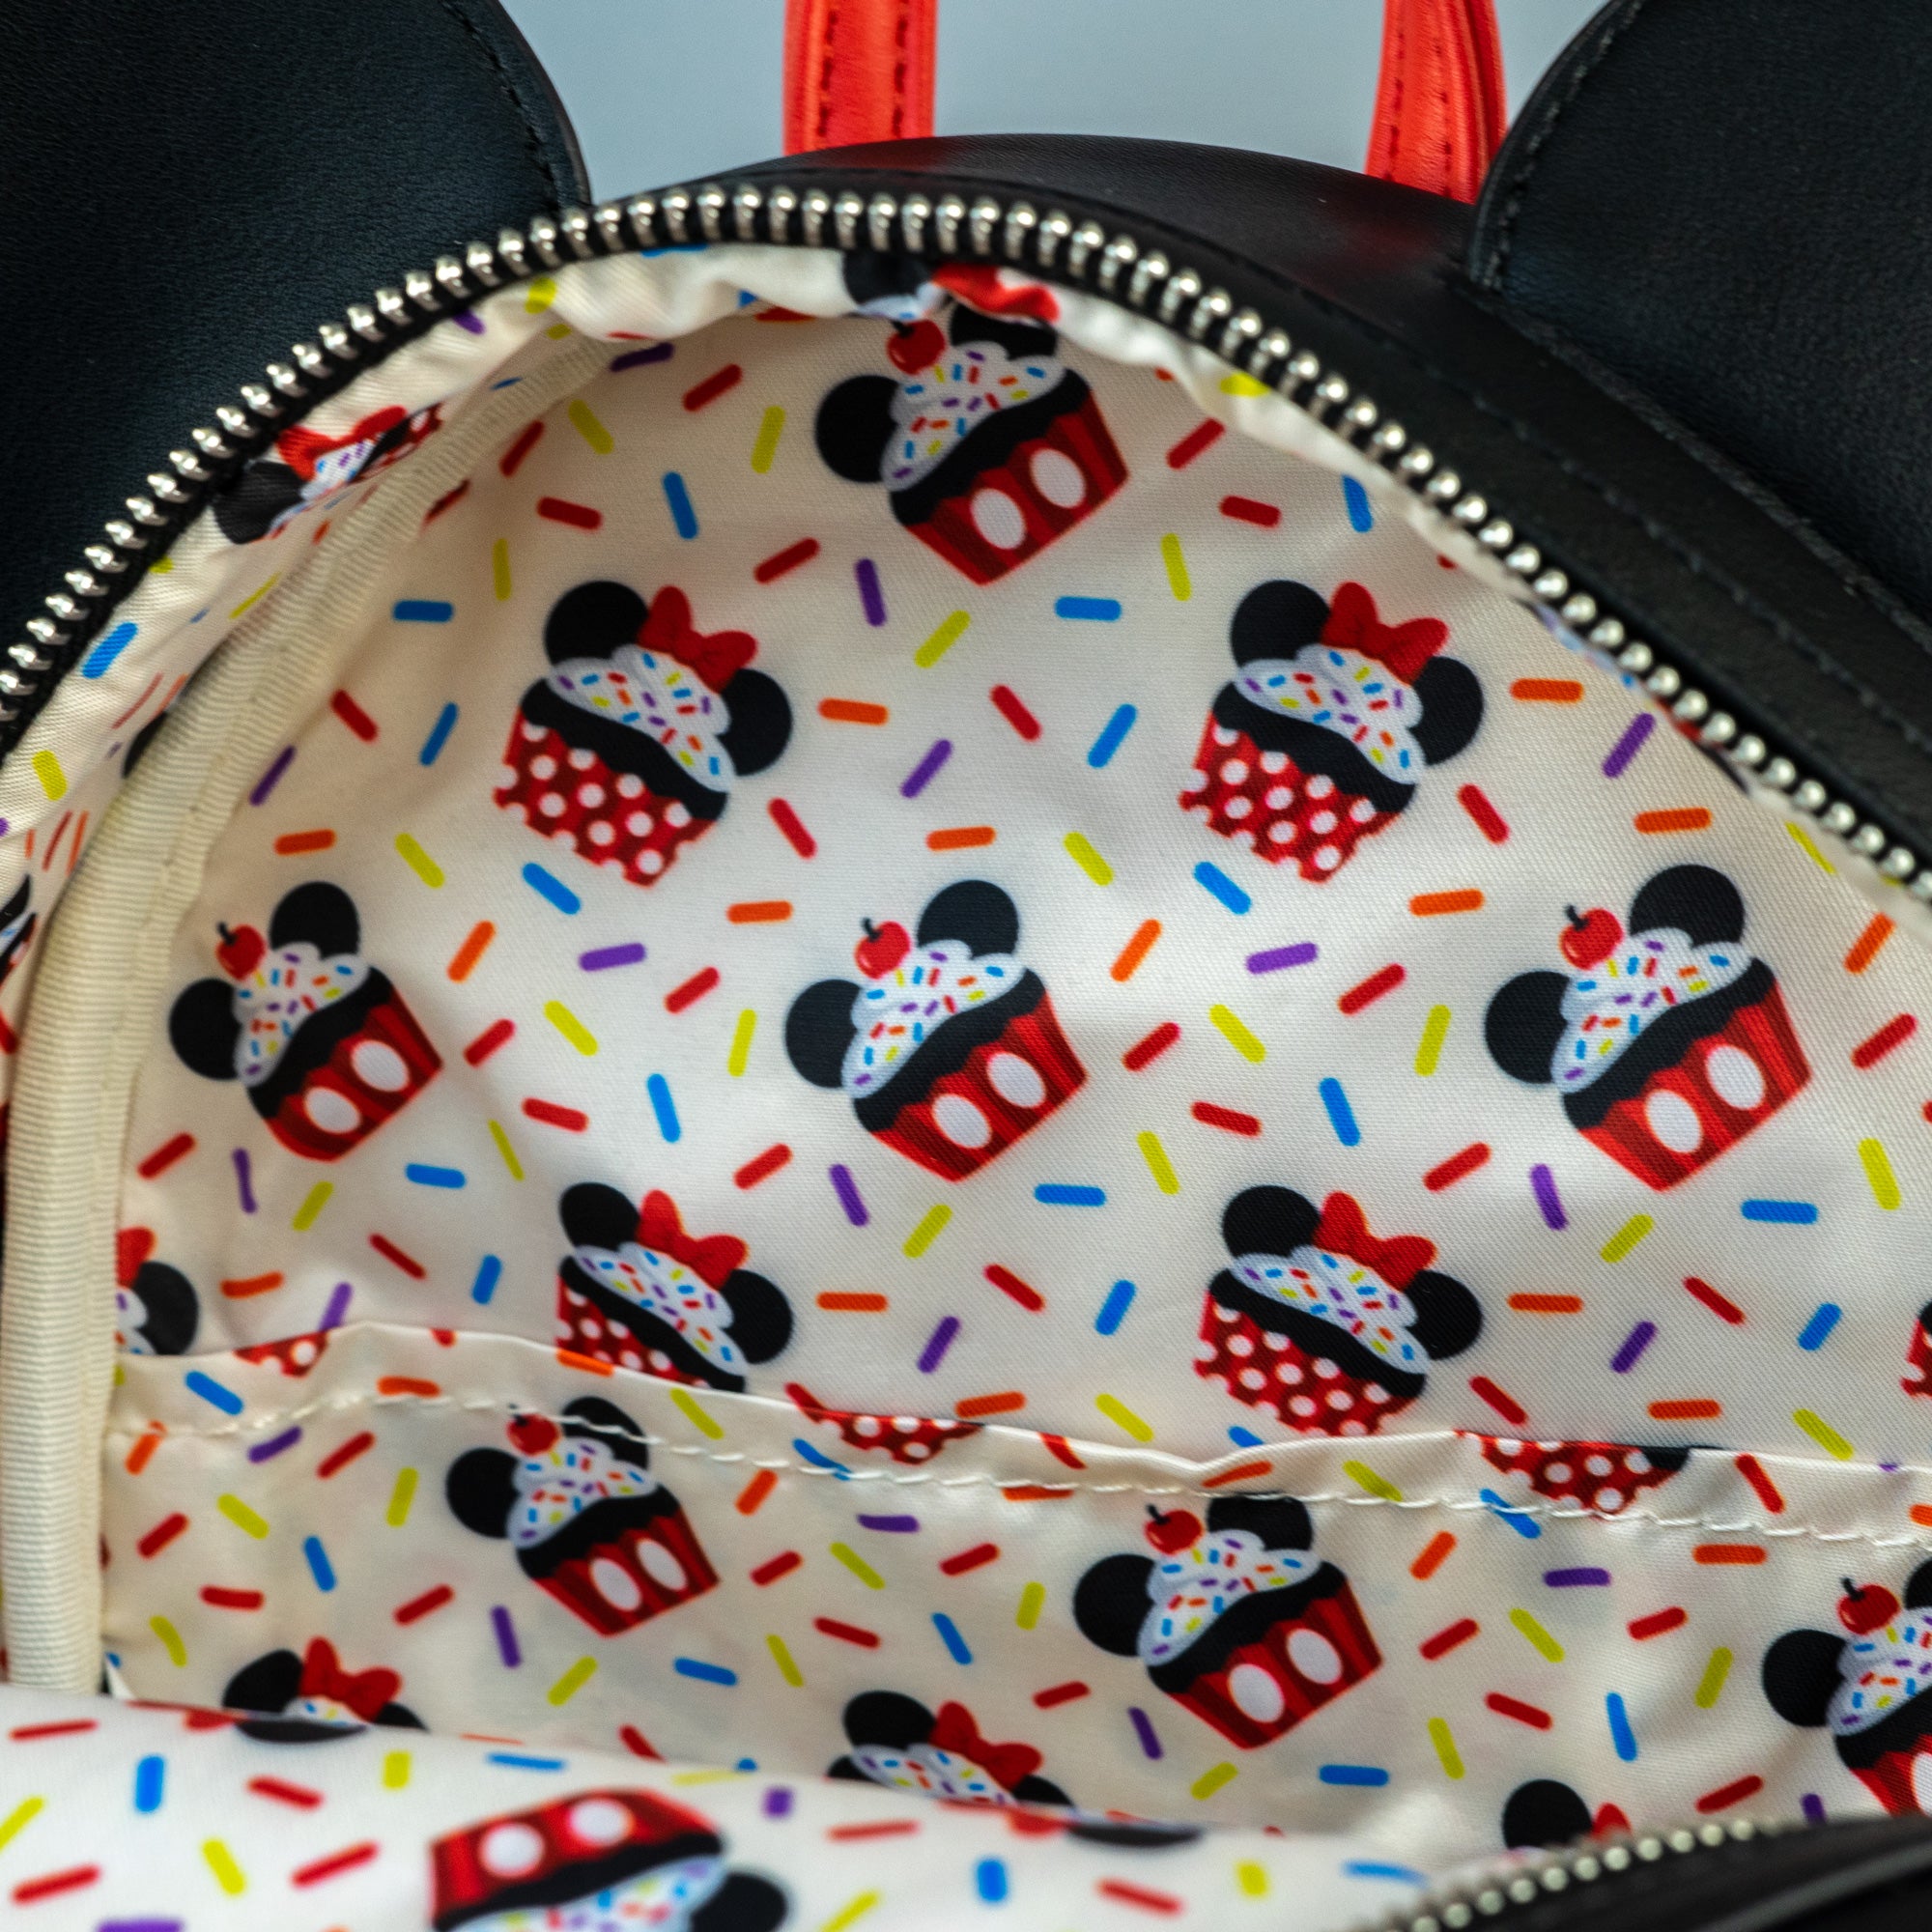 Loungefly x Disney Minnie Mouse Cupcake Mini Backpack